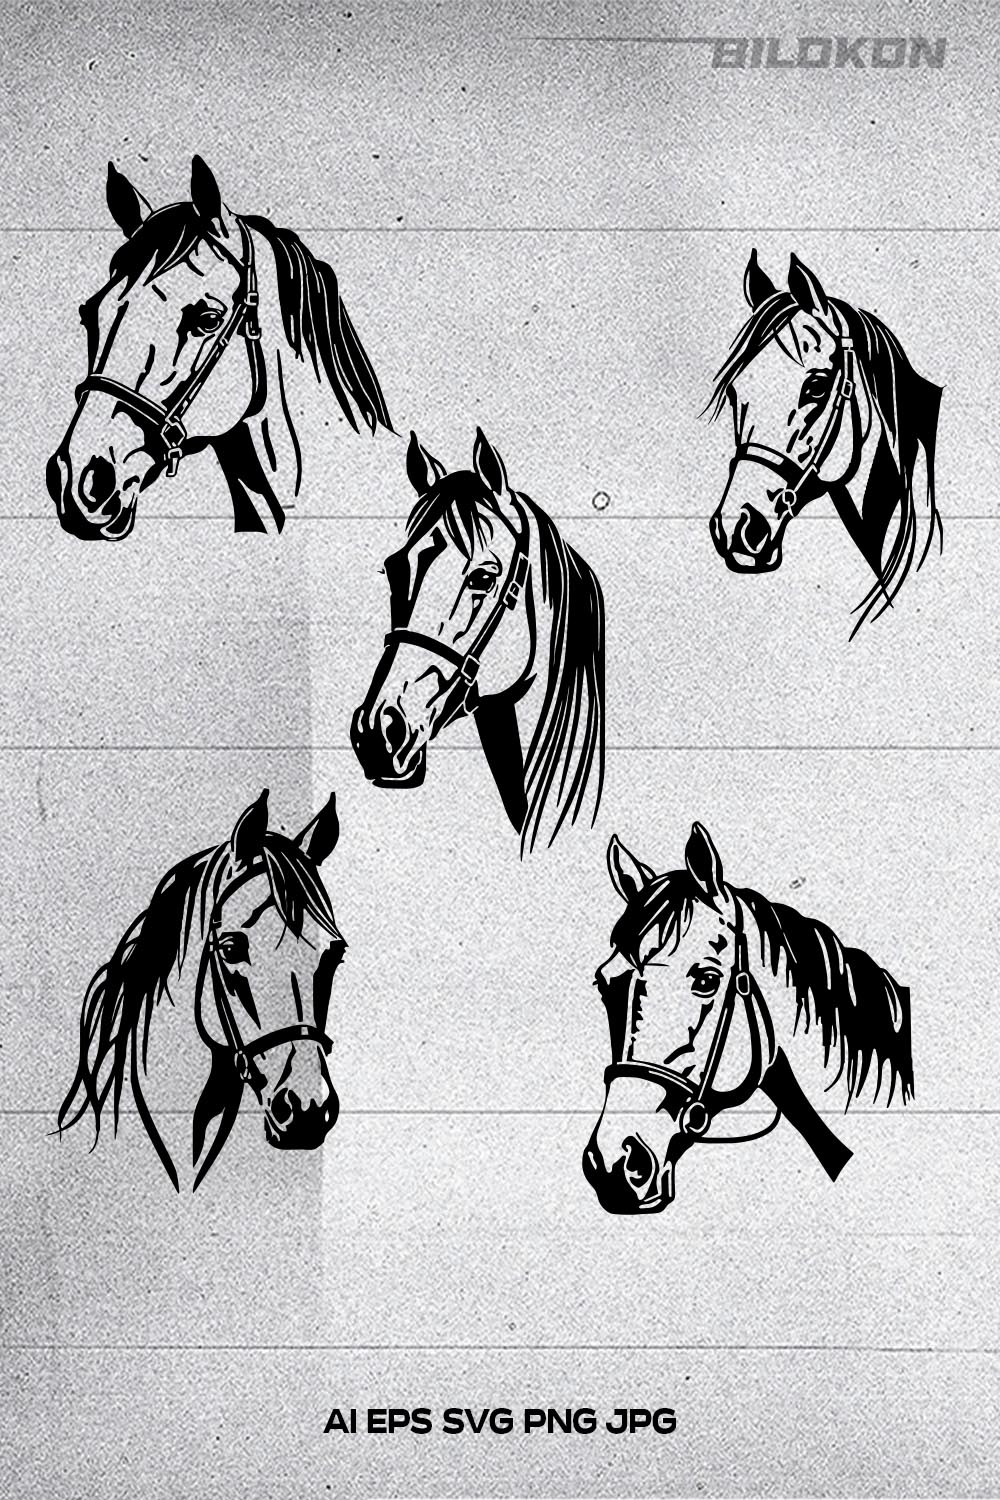 Horse head Vector illustration, SVG pinterest preview image.